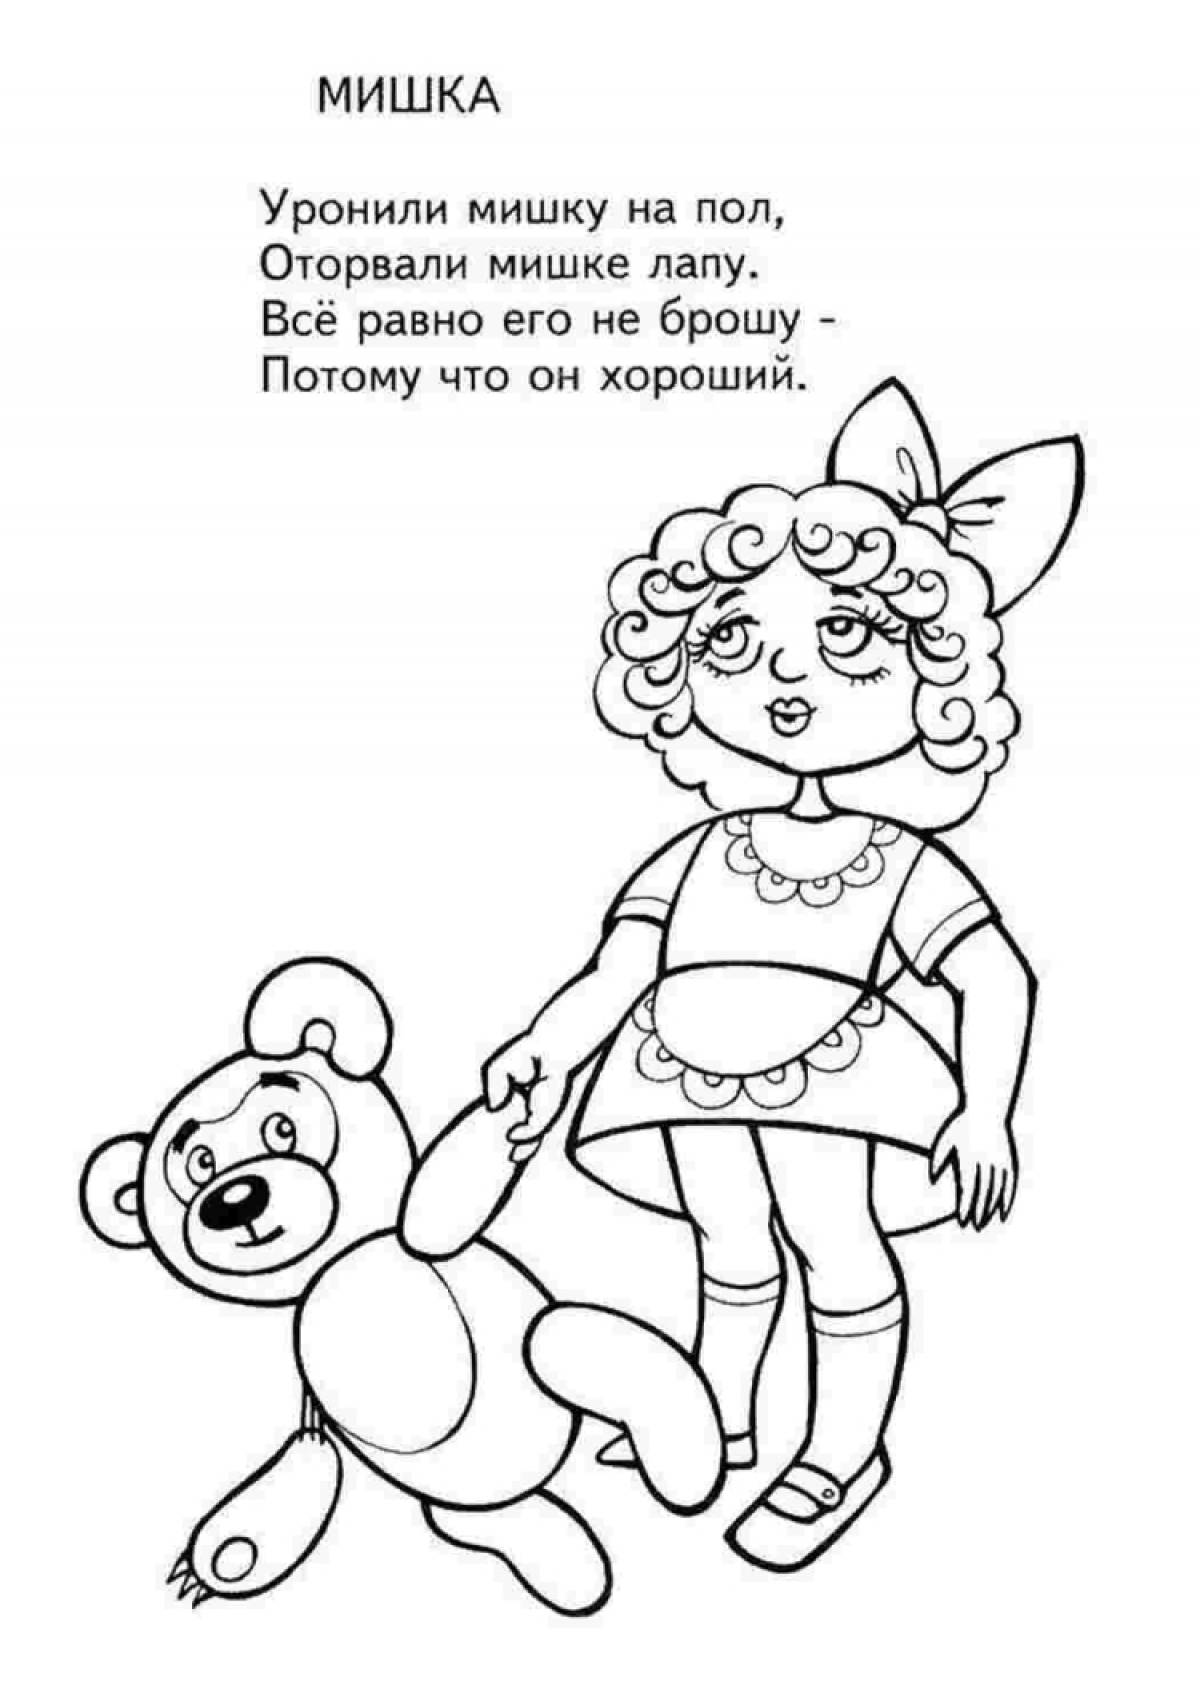 For preschoolers based on barto poetry #21